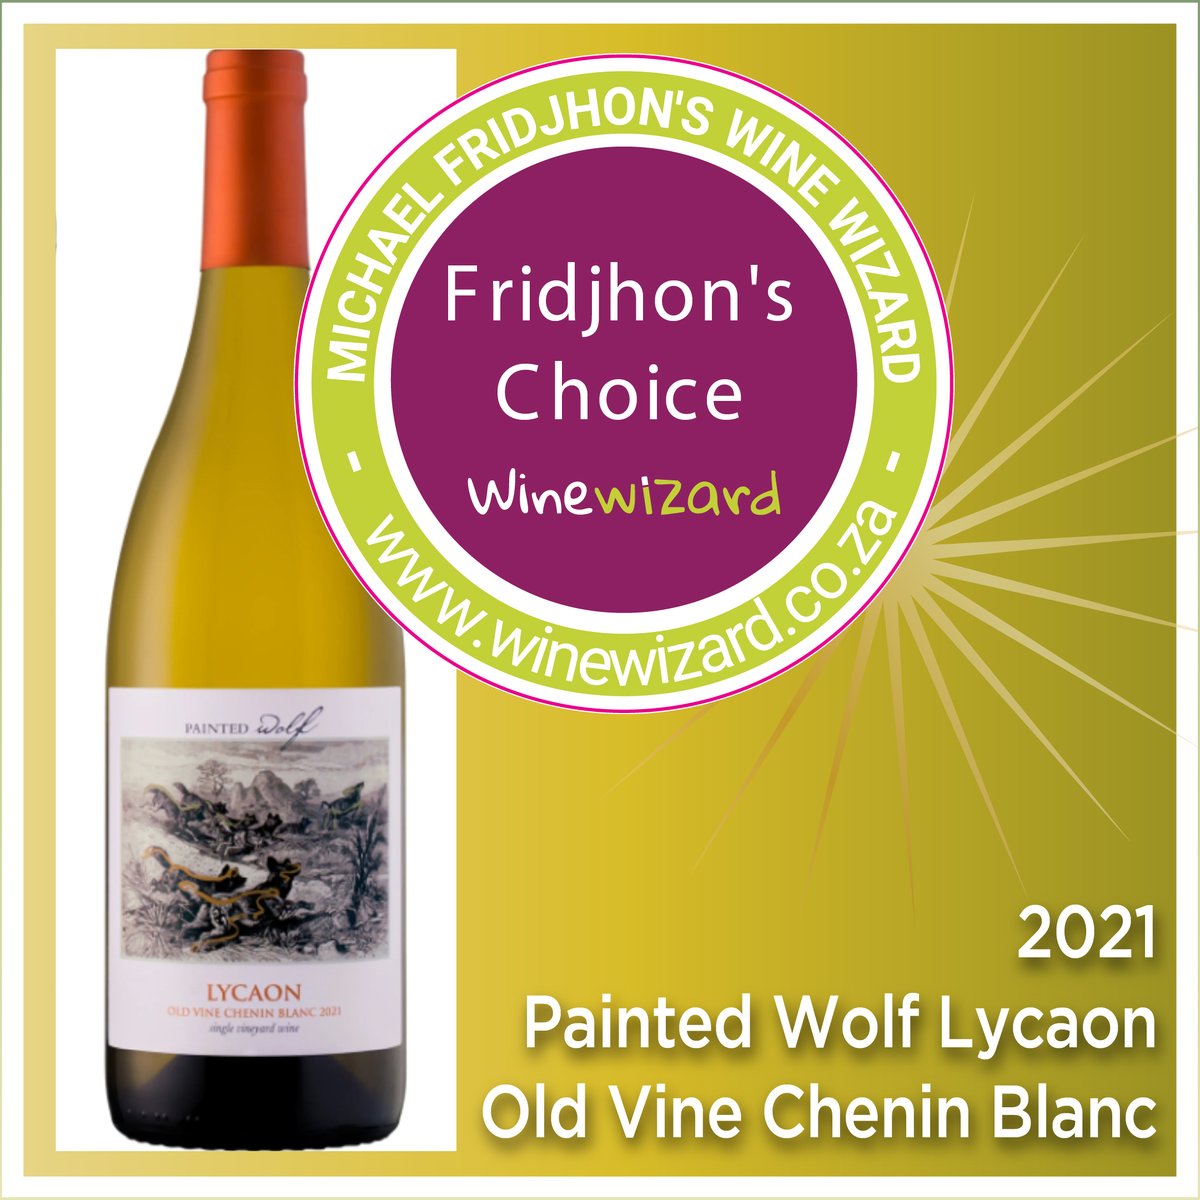 #fridjhonschoice Michael Fridjhon’s wine of the week is 𝐏𝐚𝐢𝐧𝐭𝐞𝐝 𝐖𝐨𝐥𝐟 𝐋𝐲𝐜𝐚𝐨𝐧 𝐎𝐥𝐝 𝐕𝐢𝐧𝐞 𝐂𝐡𝐞𝐧𝐢𝐧 𝐁𝐥𝐚𝐧𝐜 𝟐𝟎𝟐𝟏. “𝘚𝘩𝘰𝘸𝘺, 𝘴𝘶𝘮𝘱𝘵𝘶𝘰𝘶𝘴, 𝘧𝘳𝘢𝘨𝘳𝘢𝘯𝘵 𝘺𝘦𝘵 𝘱𝘶𝘳𝘦” Find it at winewizard.co.za/wine/9792 @PaintedWolfWine